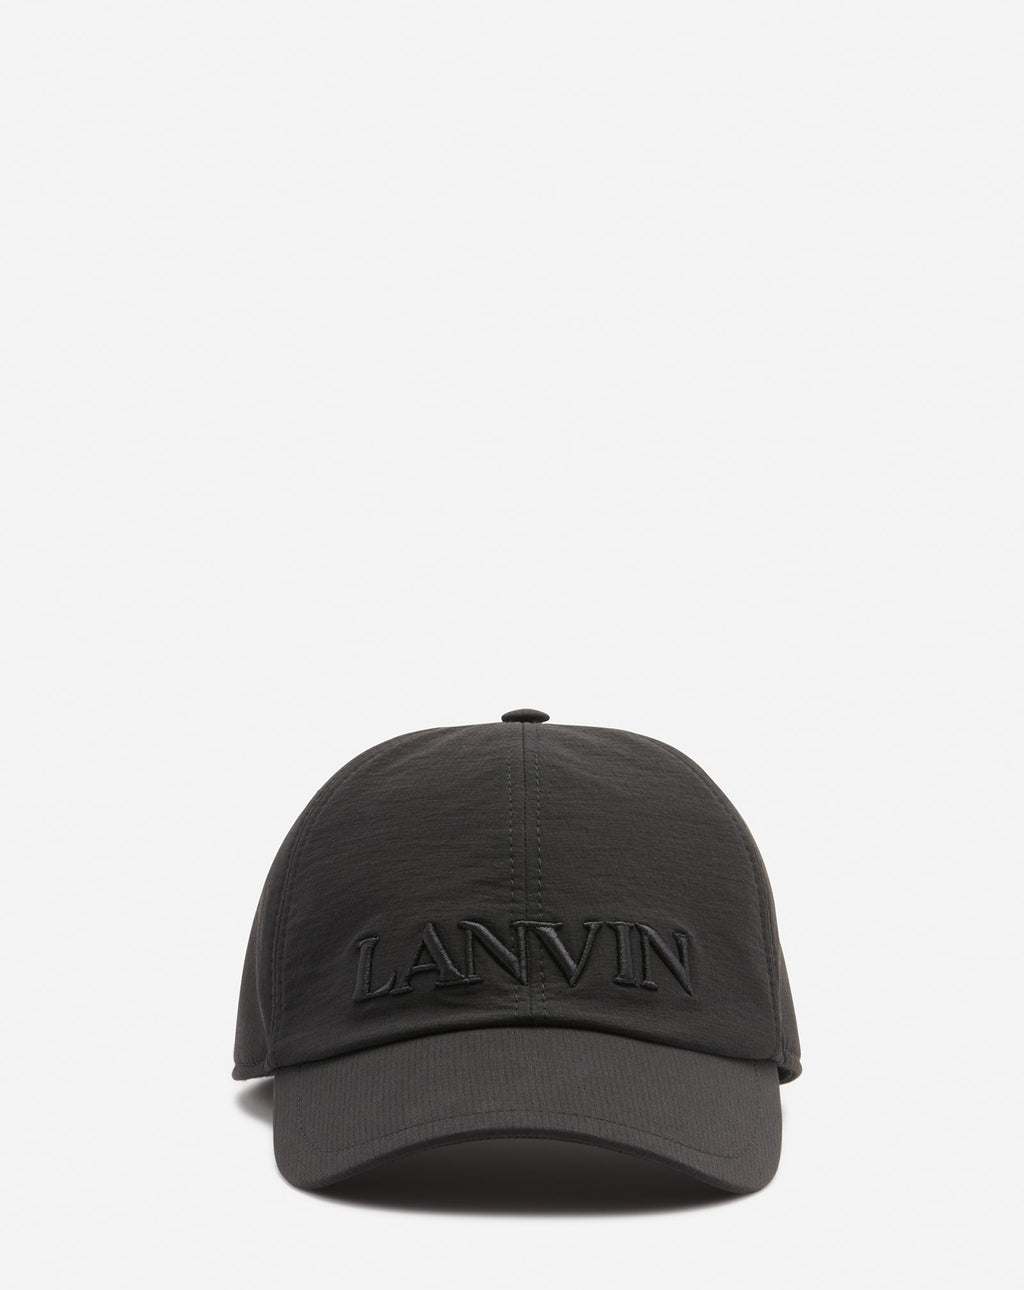 LANVIN CAP IN RIPSTOP BLACK | Lanvin